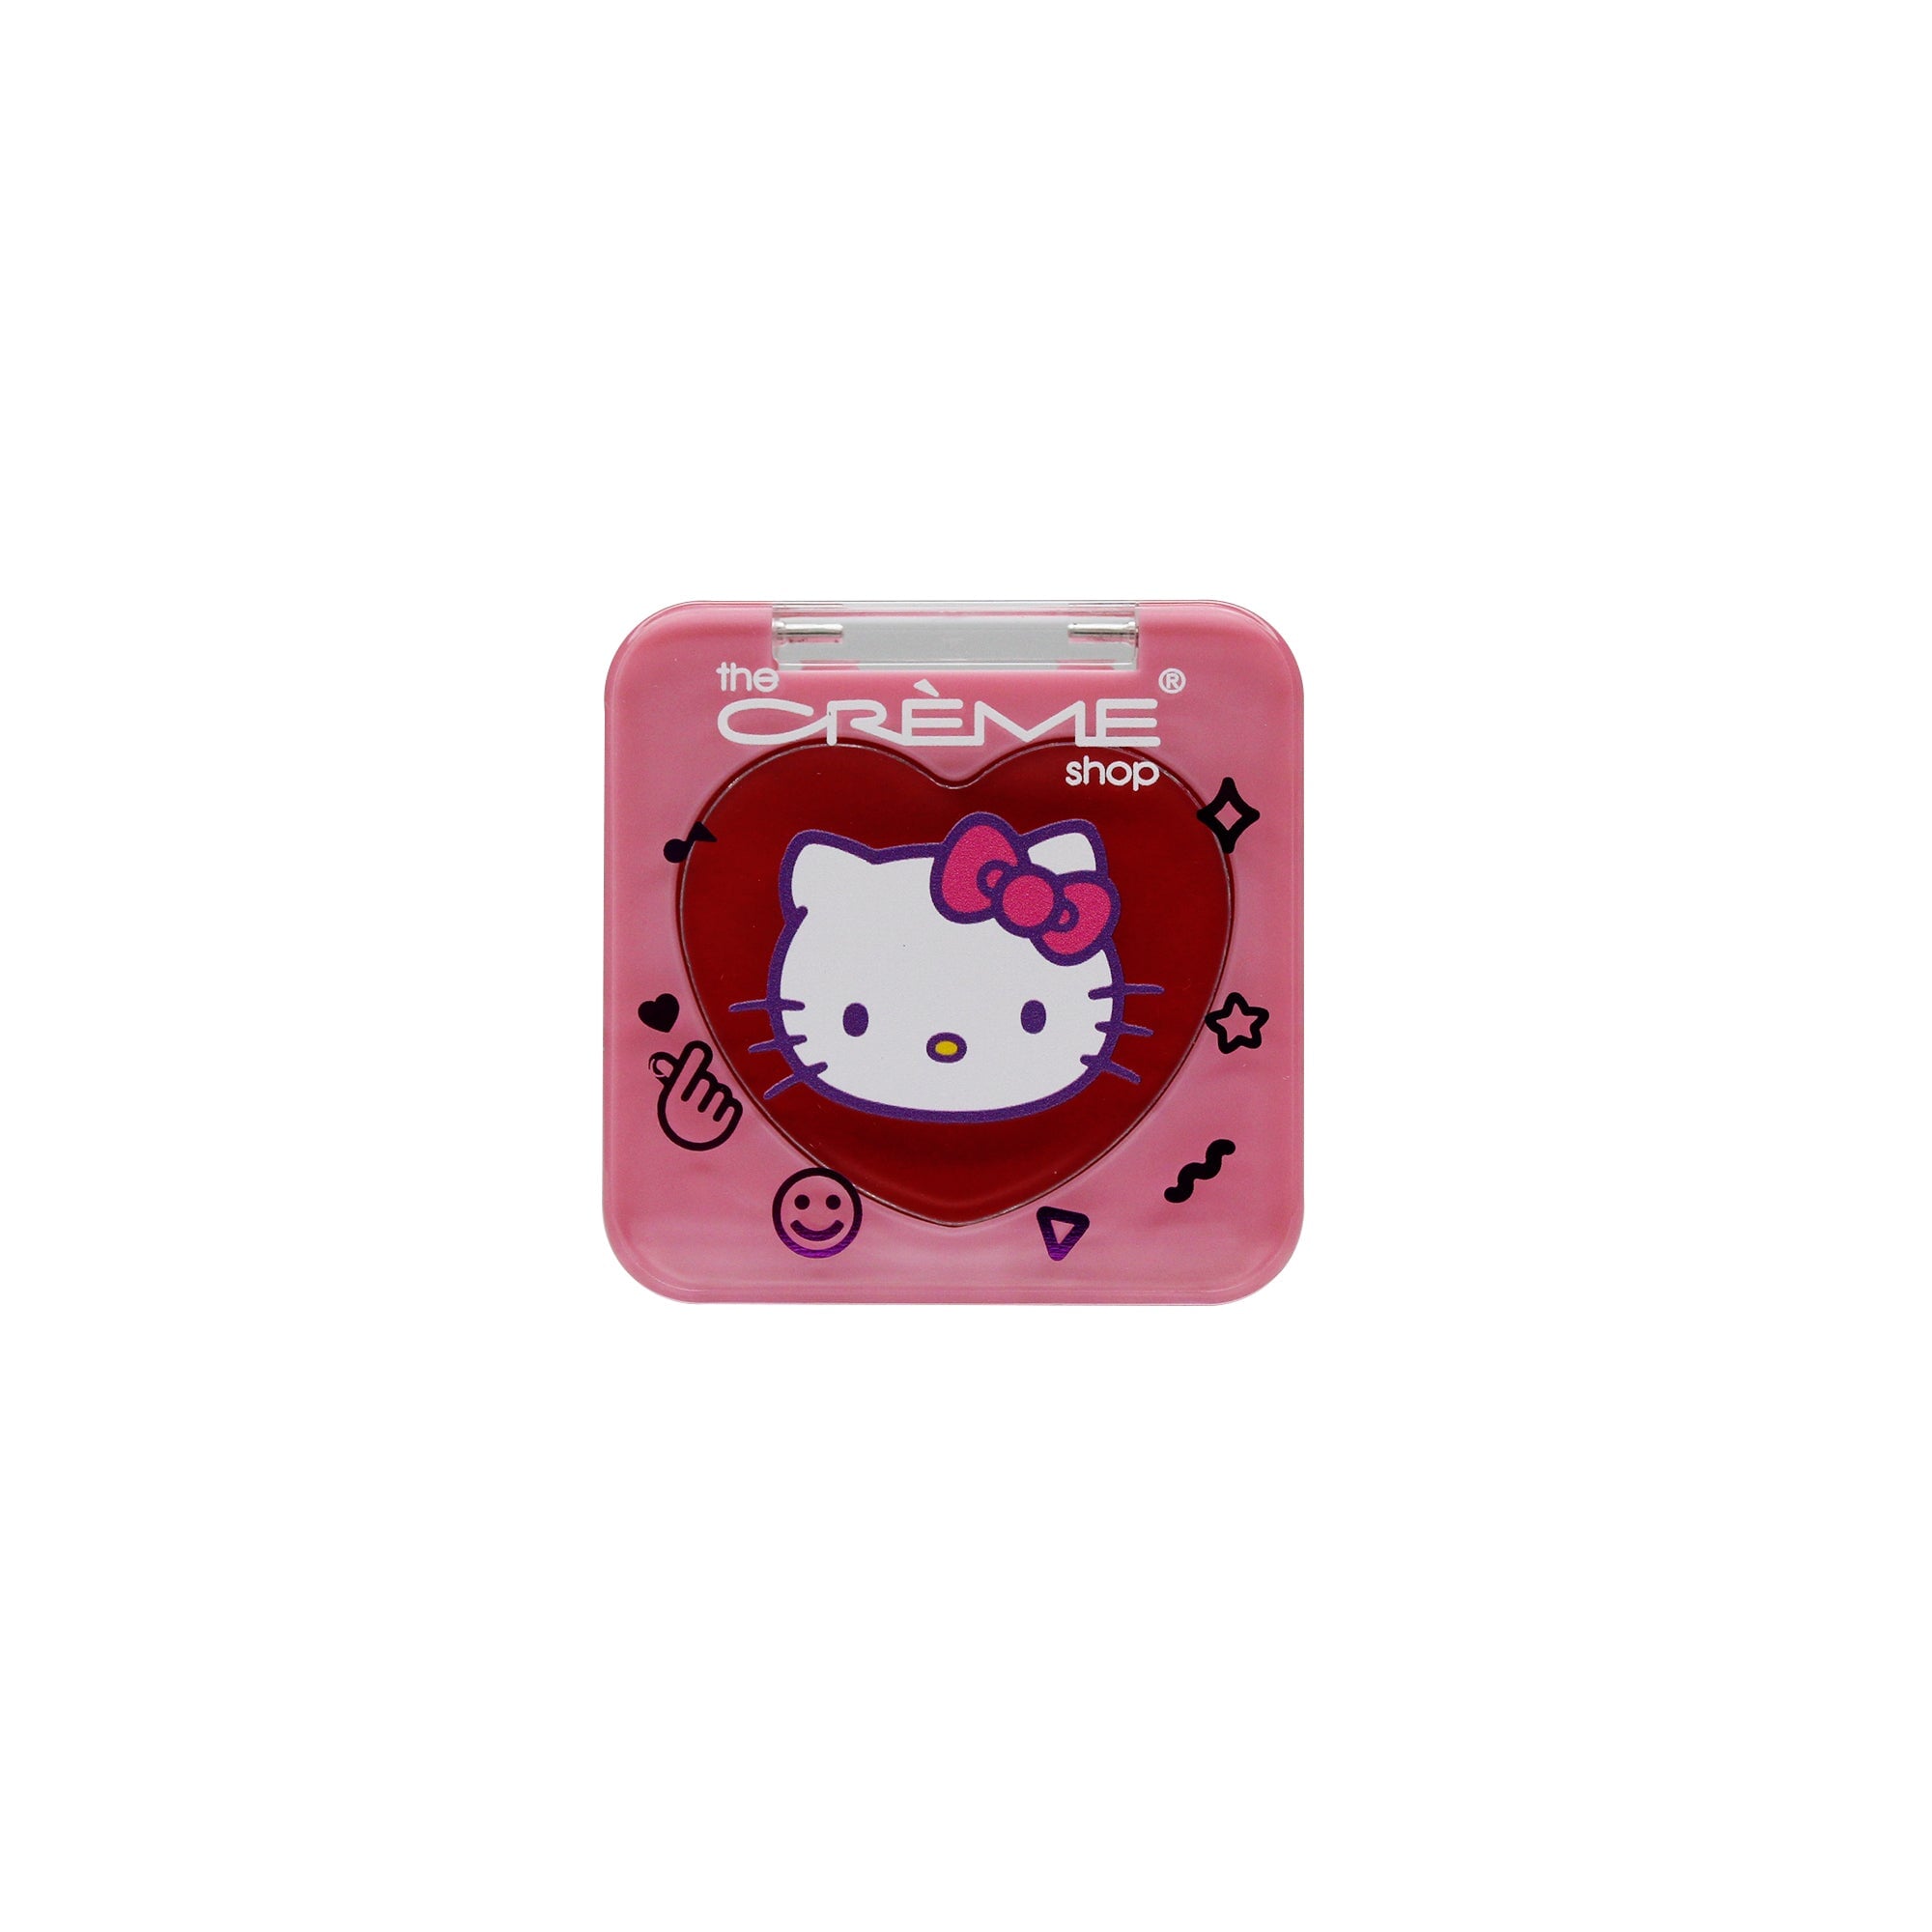 The Crème Shop x Hello Kitty(Purple) Blush Balm - Cheeky Pinky Blush The Crème Shop x Sanrio 